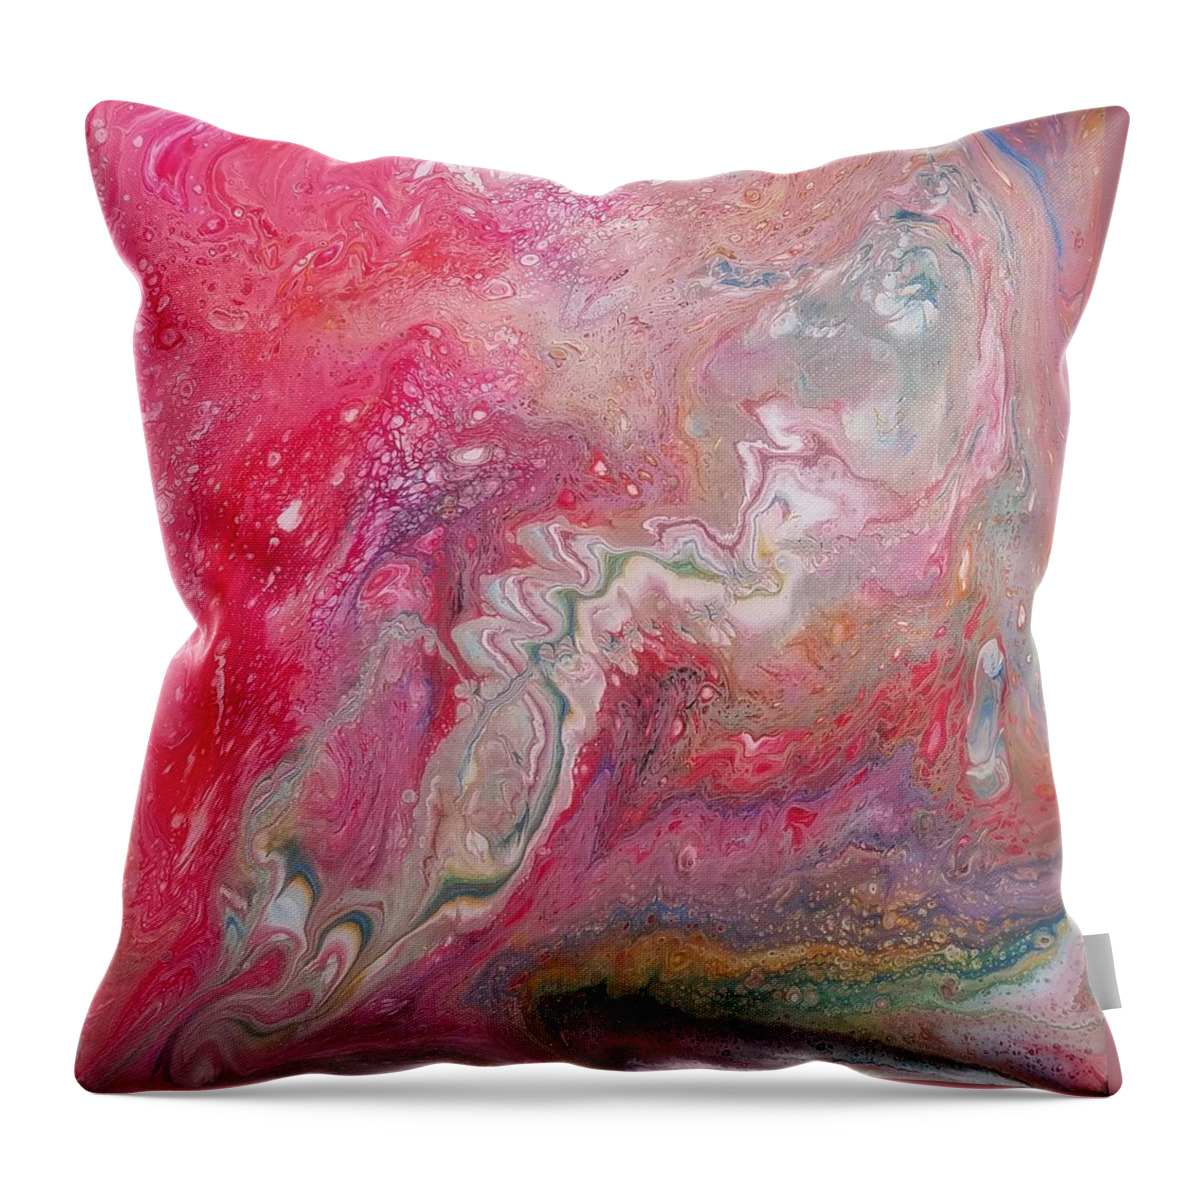 Bubblegum Throw Pillow featuring the painting Bubblegum Fantasy by Allison Fox